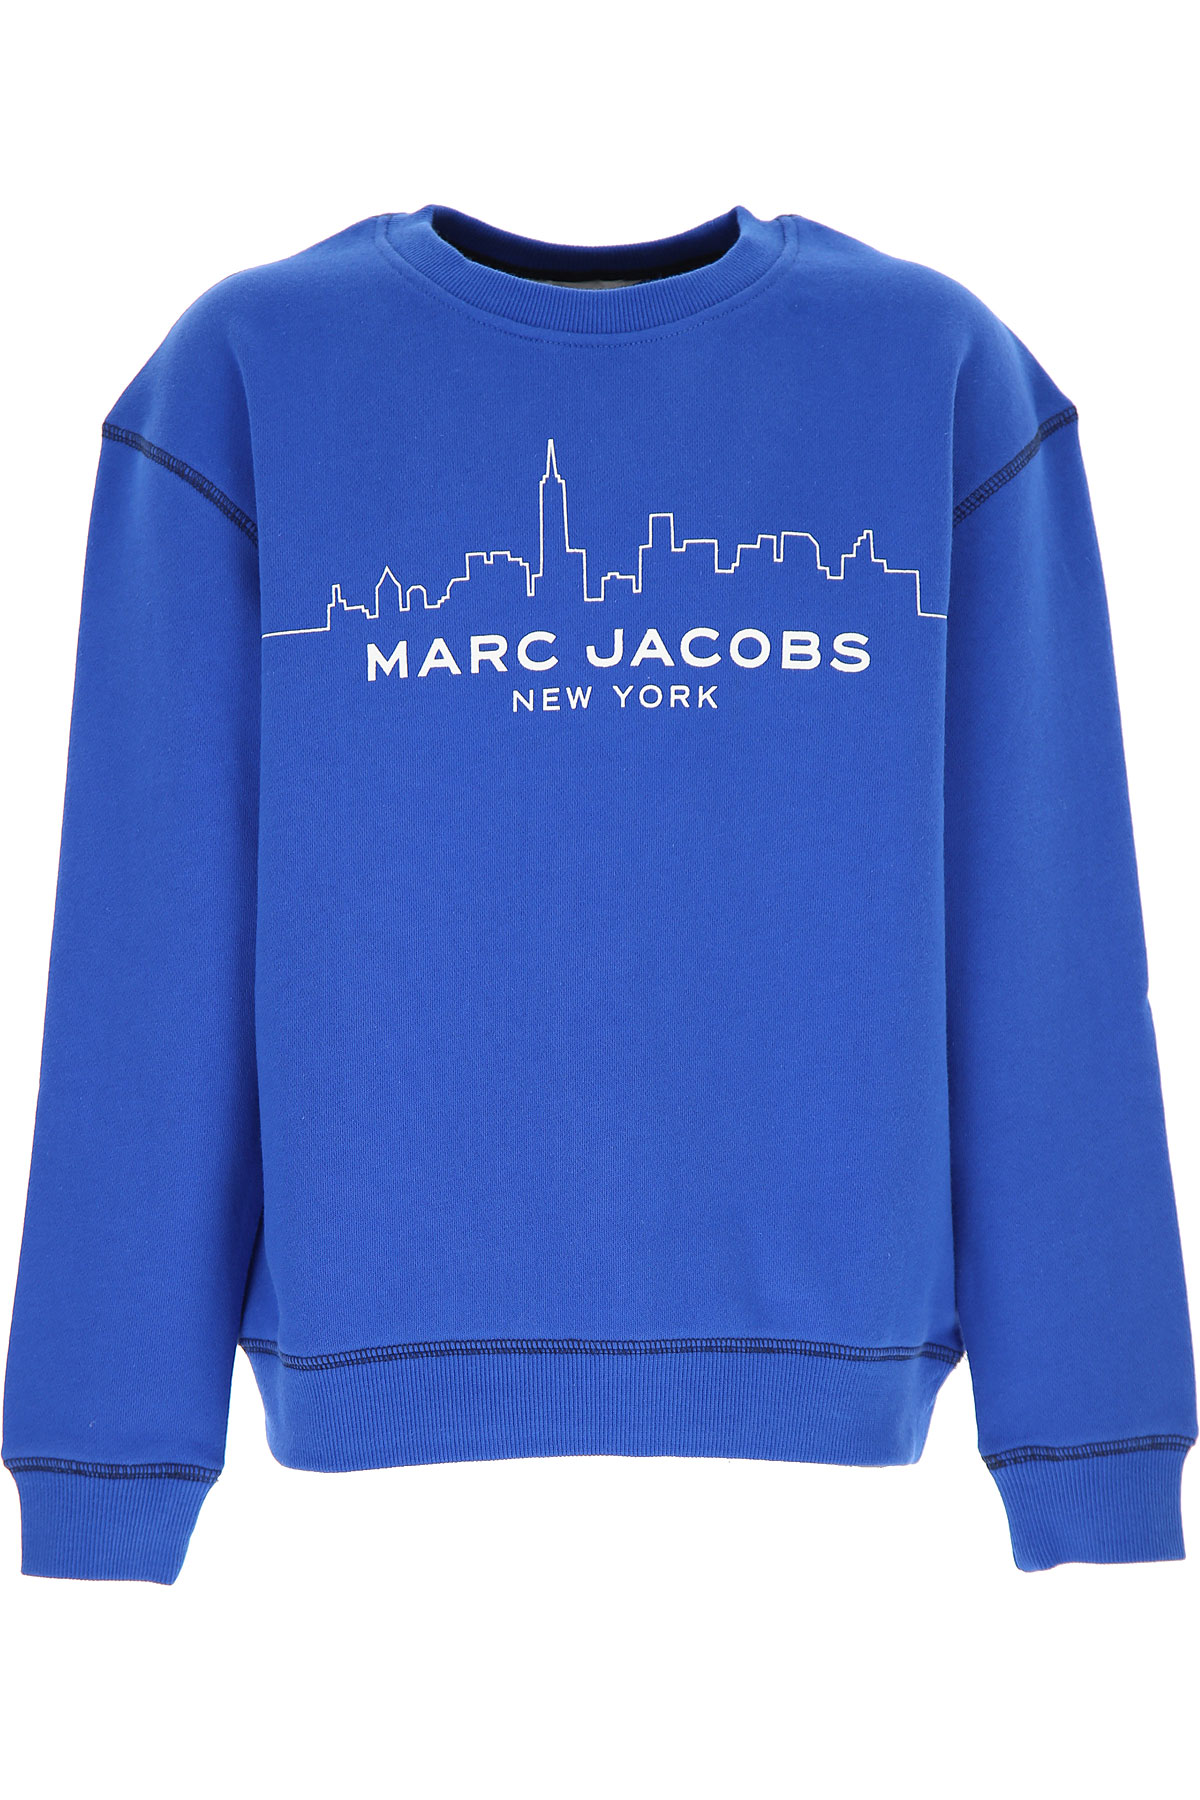 Marc Jacobs Kinder Sweatshirt & Kapuzenpullover für Jungen Günstig im Sale, Blau, Baumwolle, 2017, 10Y 12Y 14Y 2Y 3Y 4Y 5Y 6Y 8Y